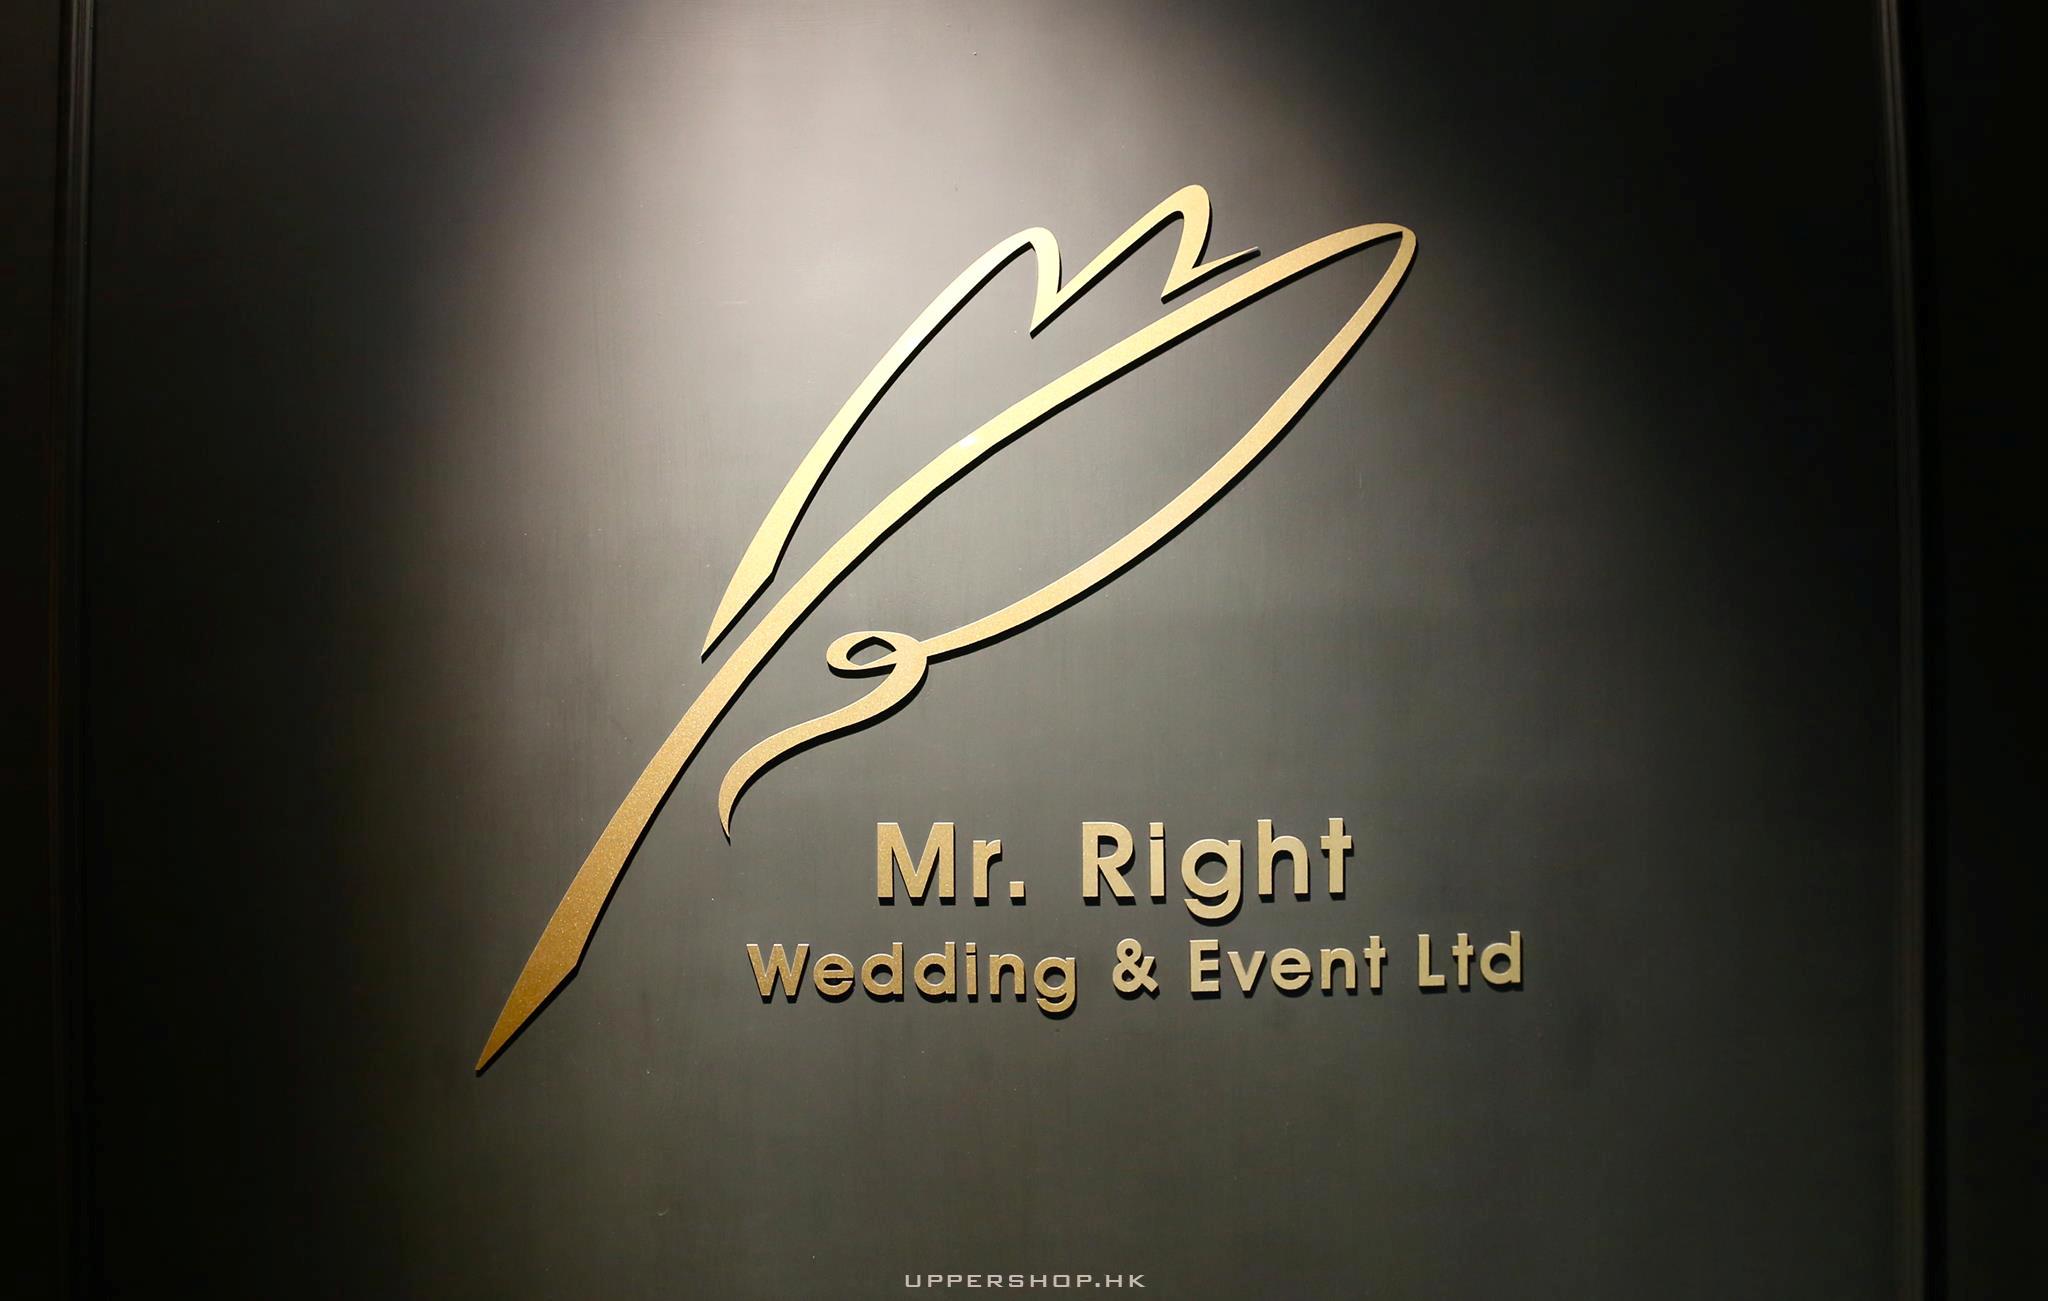 Mr. Right Wedding & Event